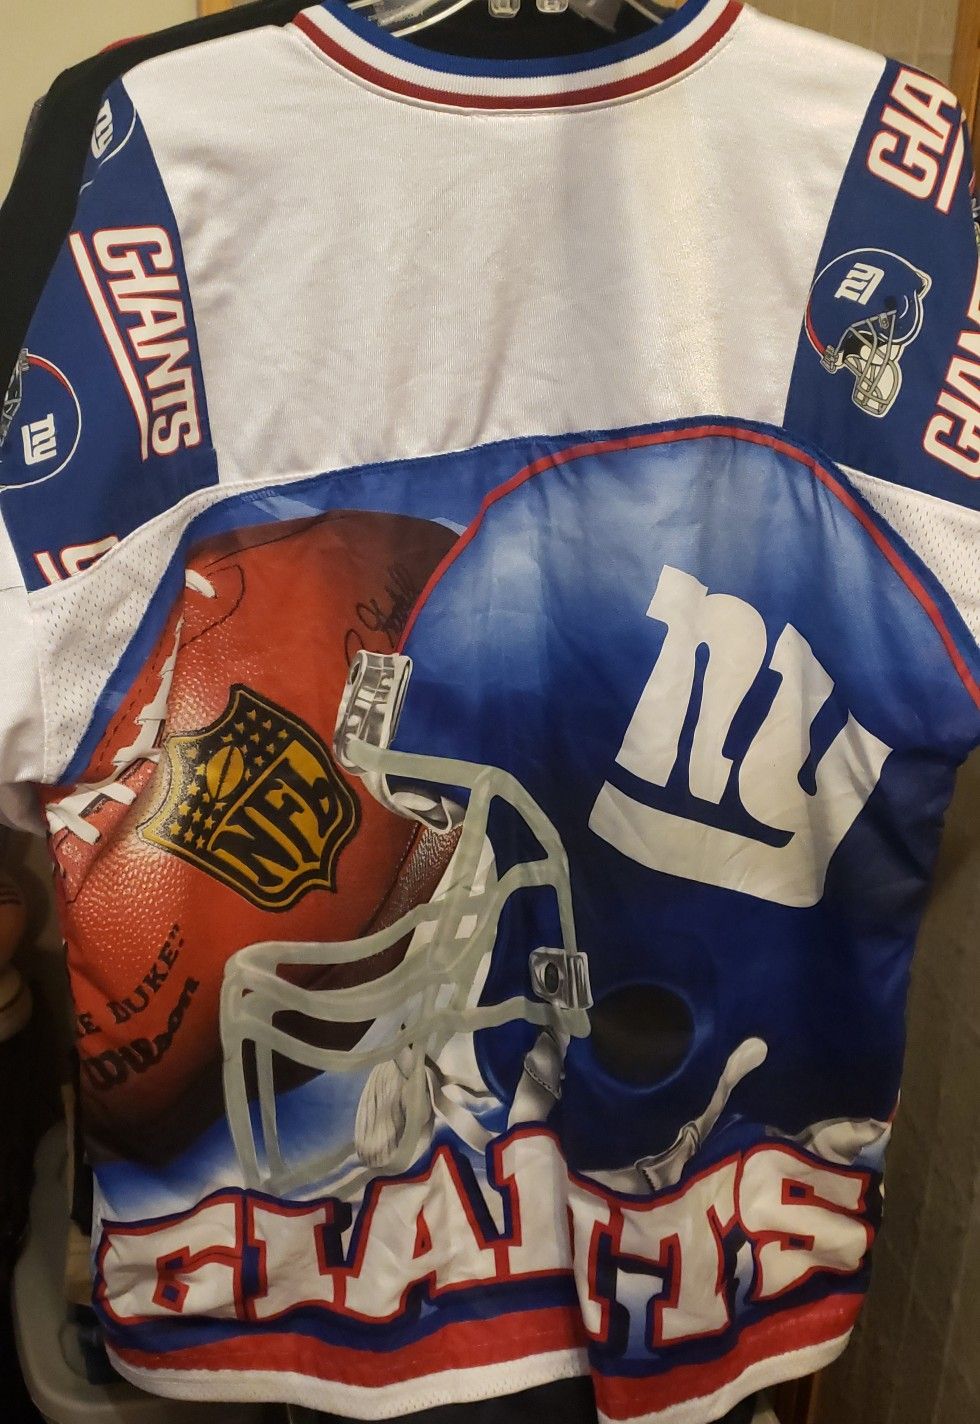 New York Giants Vintage jersey size Large